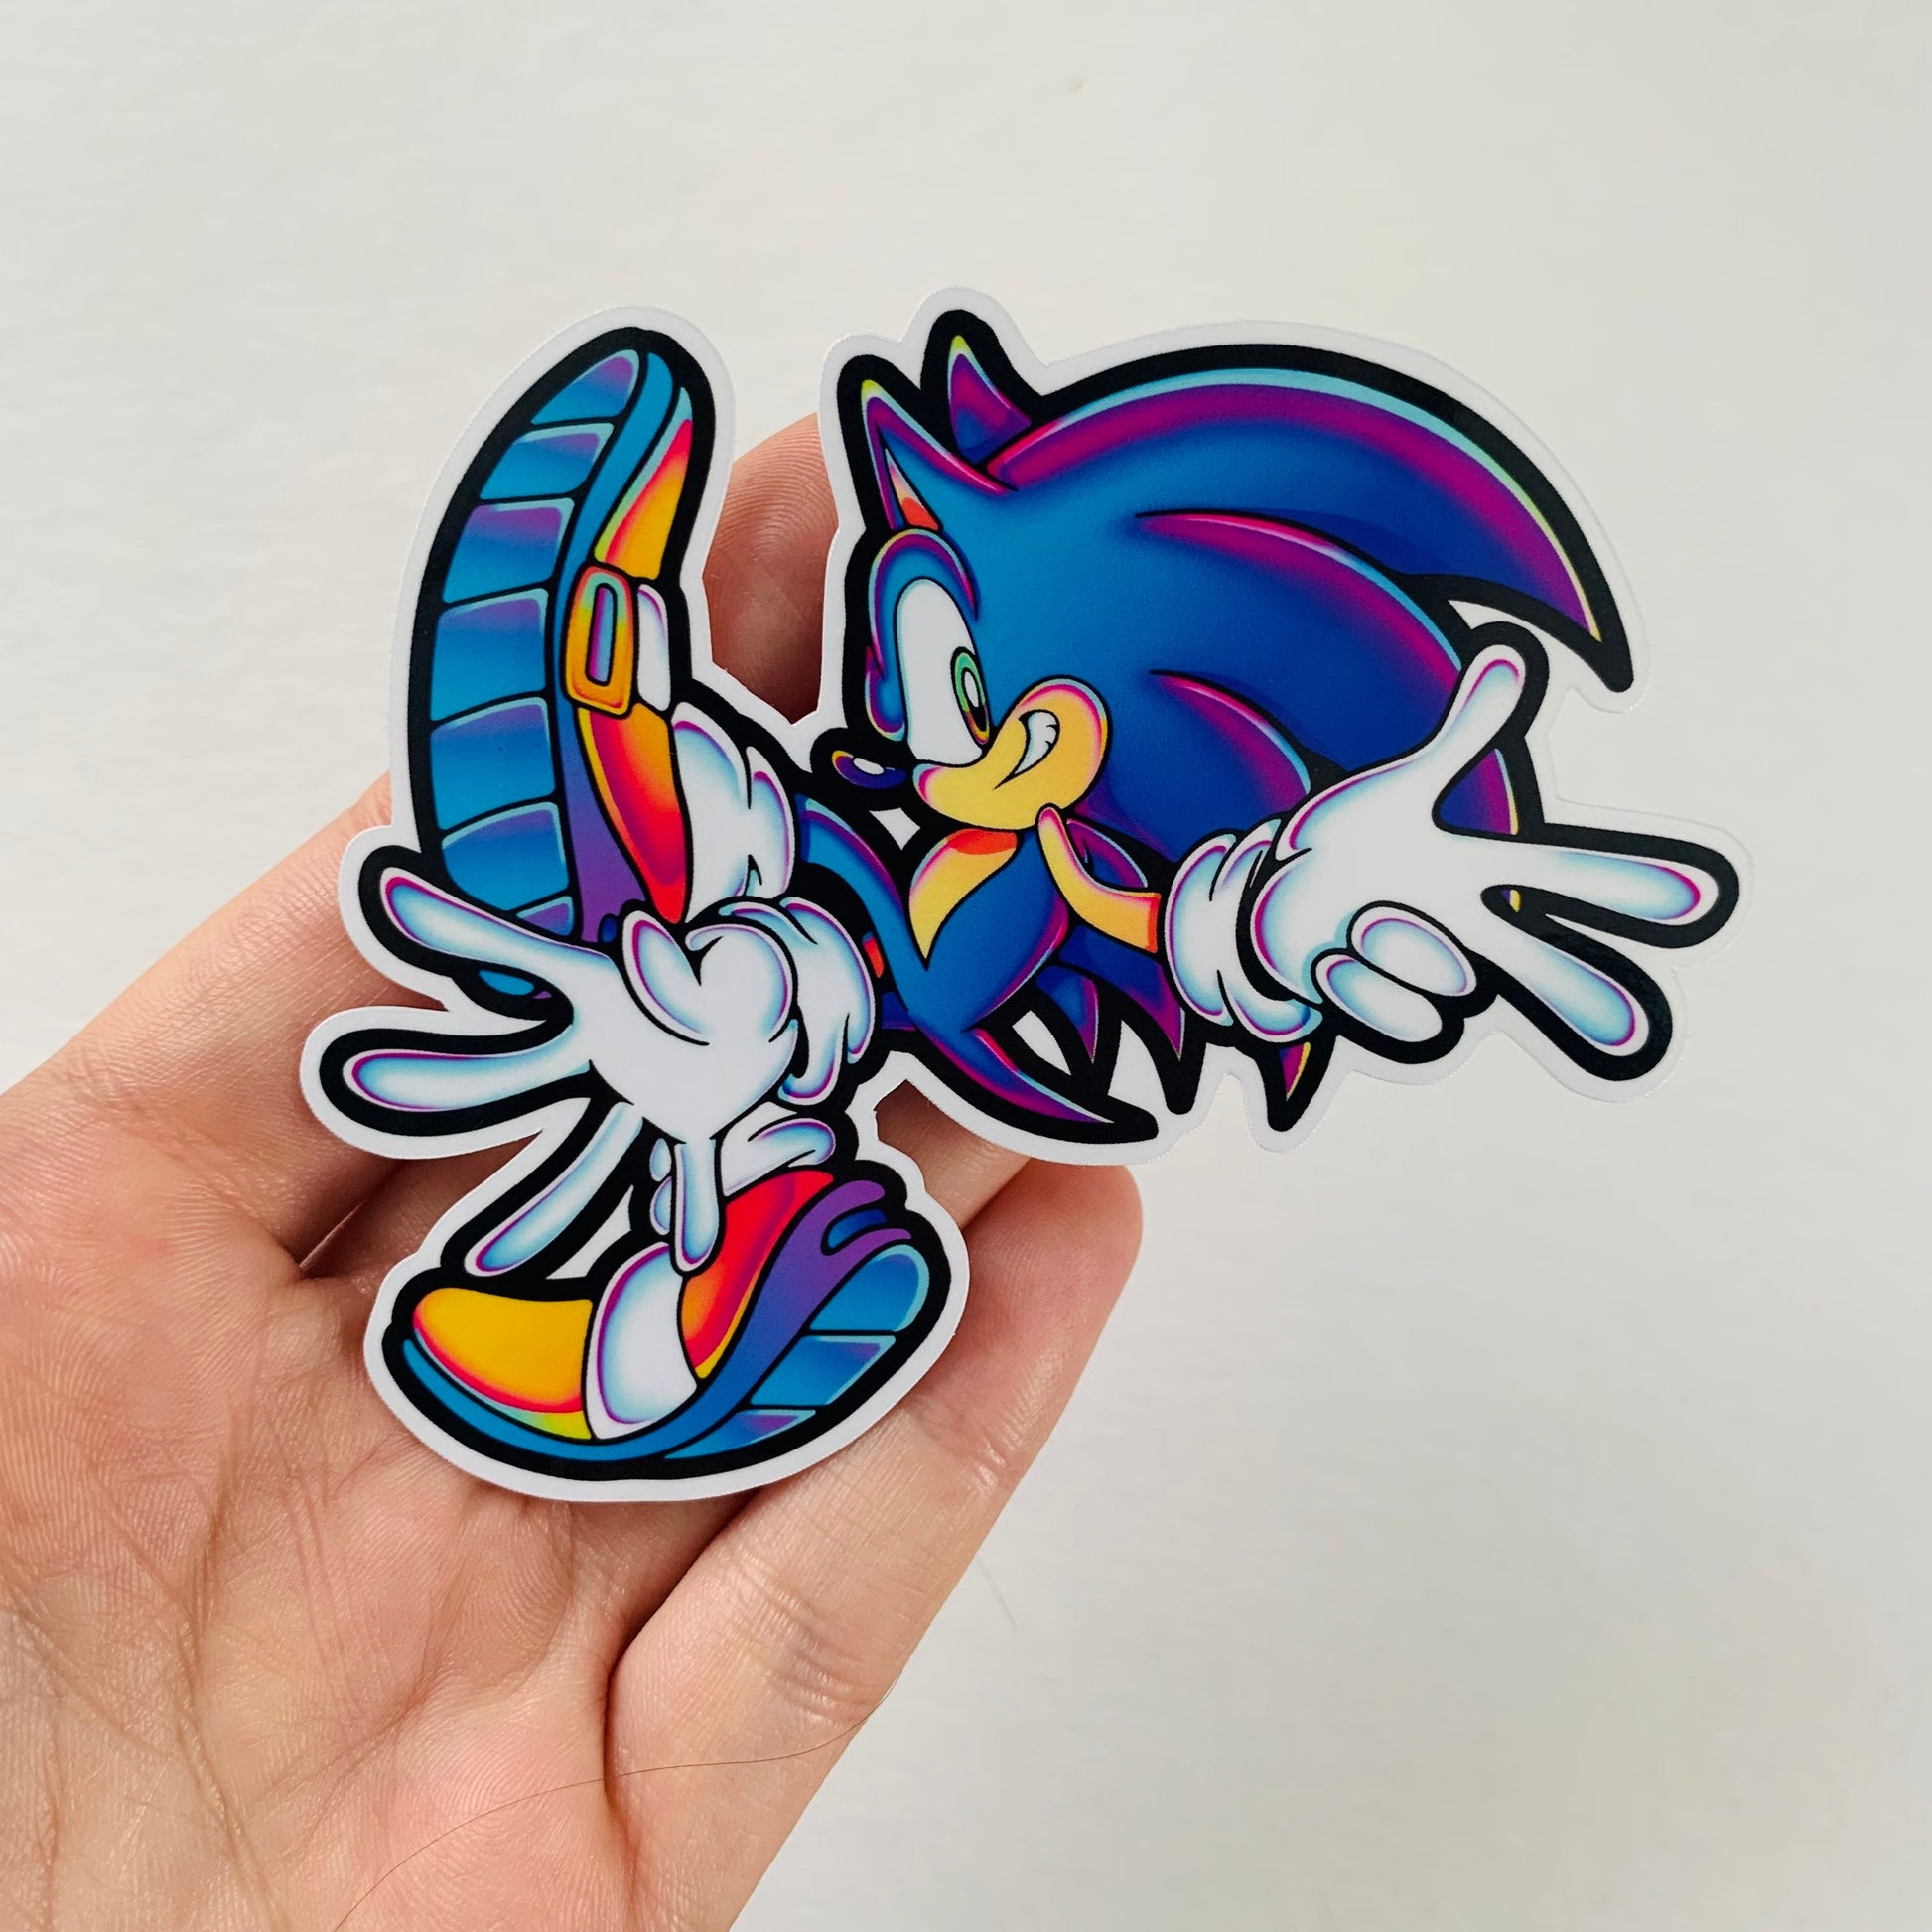 The Blue Blur 3.75" Sonic Sticker